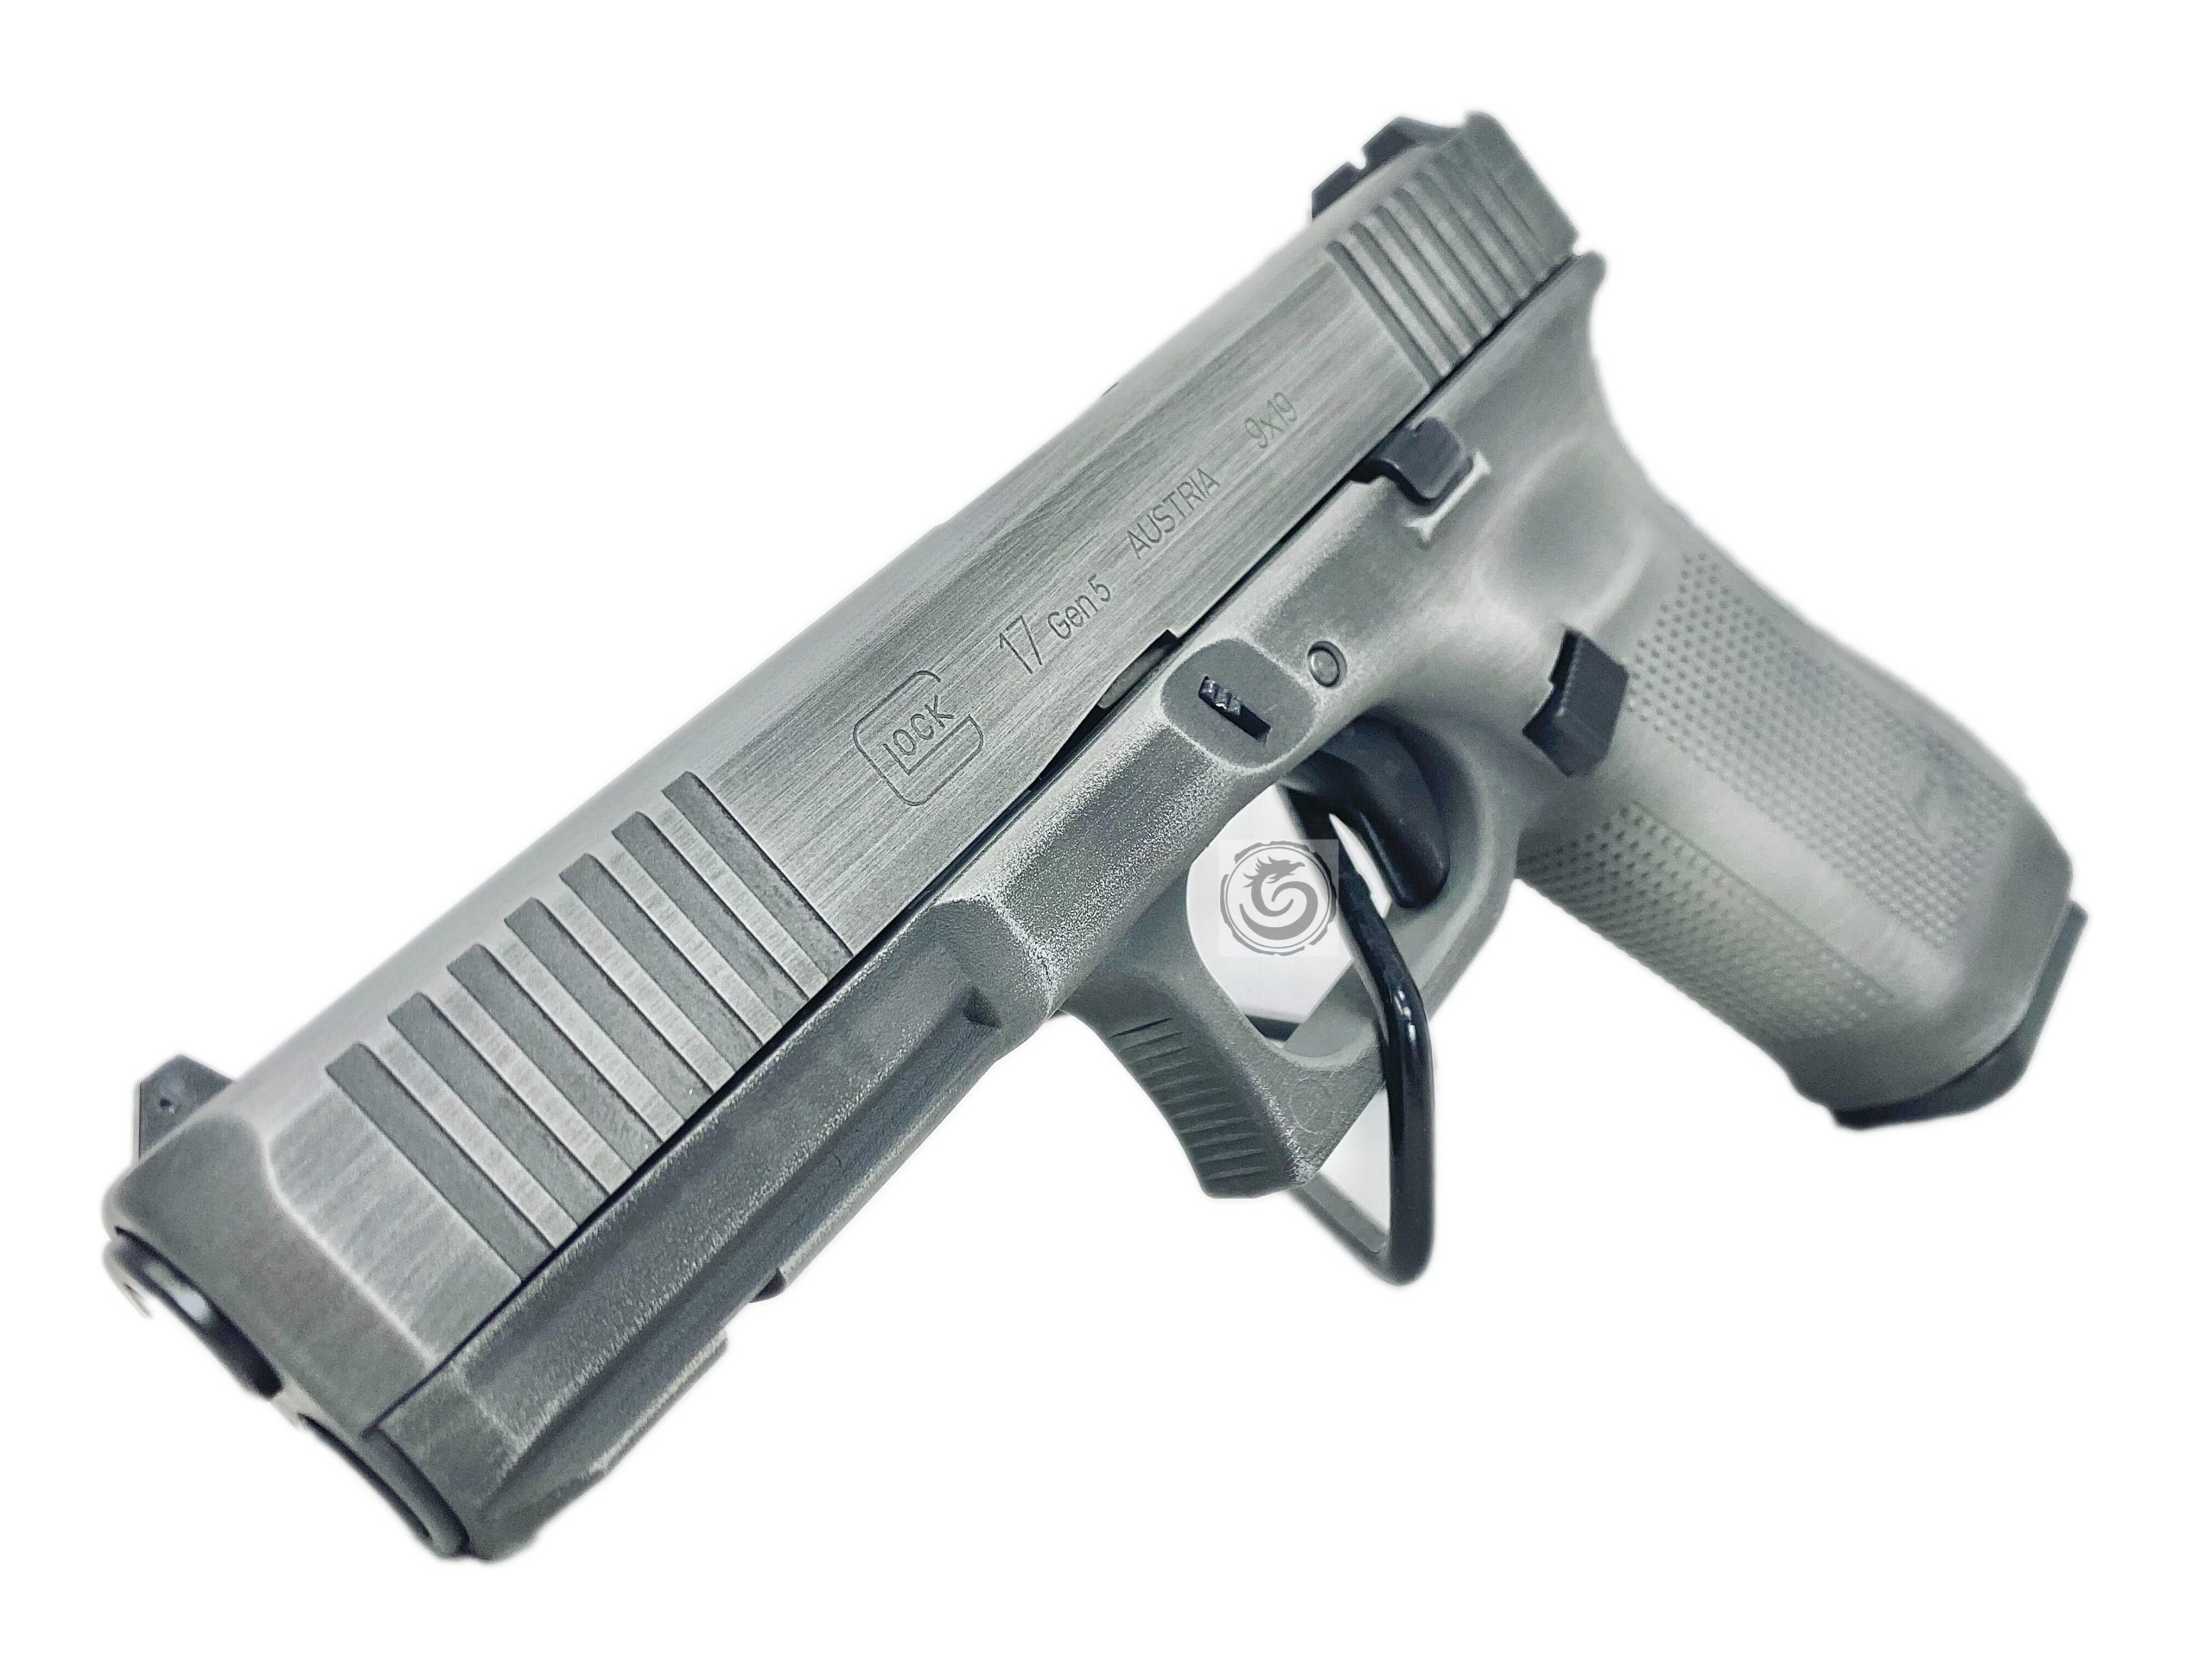 Glock 17 Gen5, Semi-Automatic, 9mm, 4.48 Barrel, Battlefield Green, 17+1  Rounds - 719632, Semi-Automatic at Sportsman's Guide